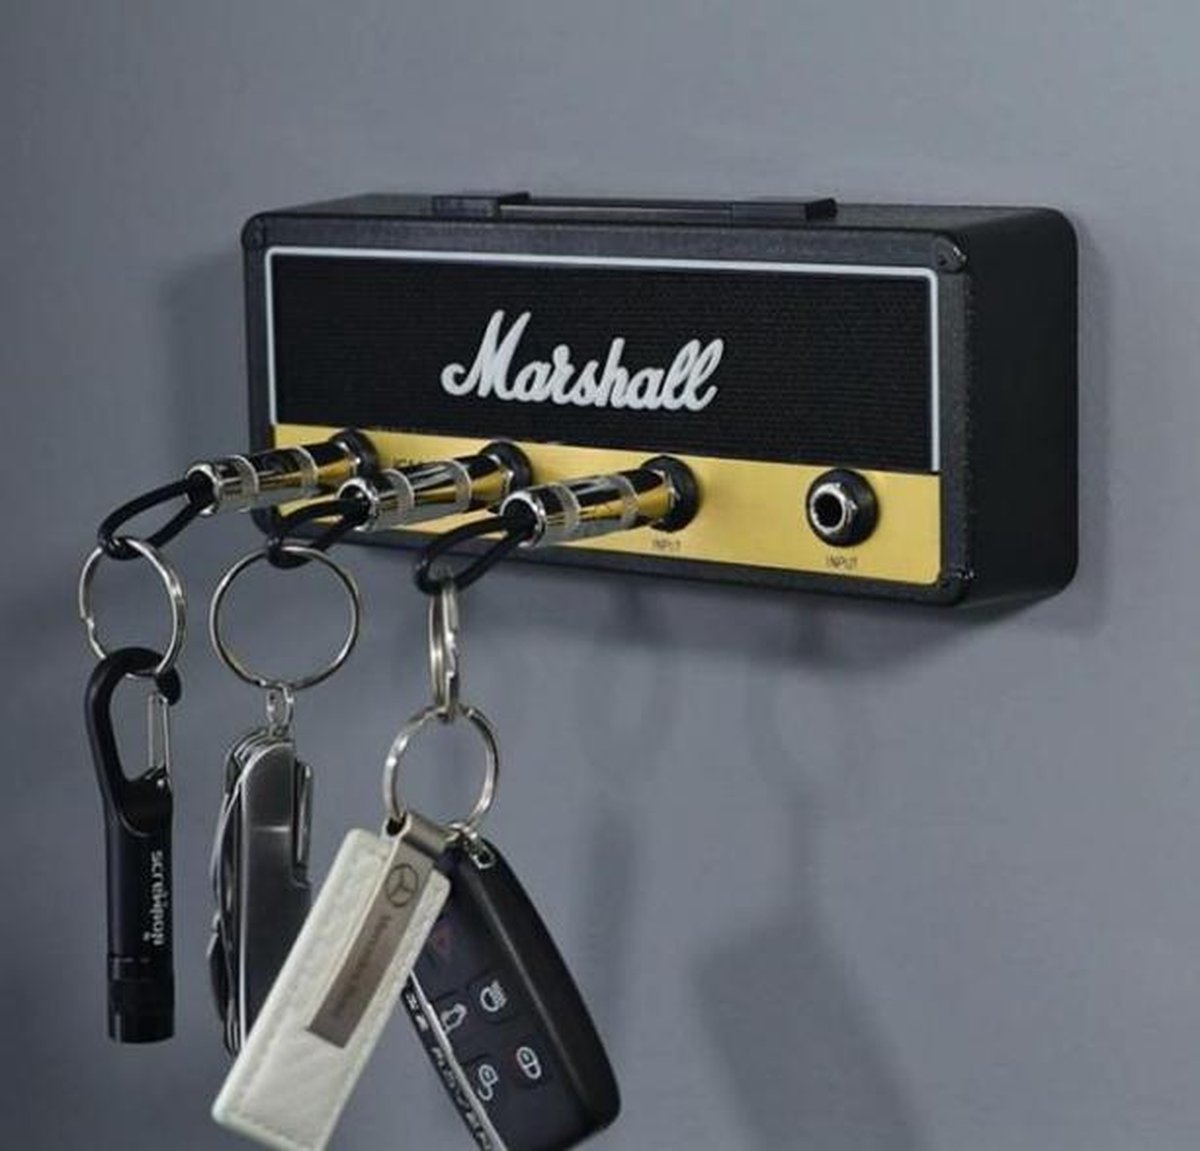 Pluginz Official Marshall Jack Rack Standard porte-clés mur